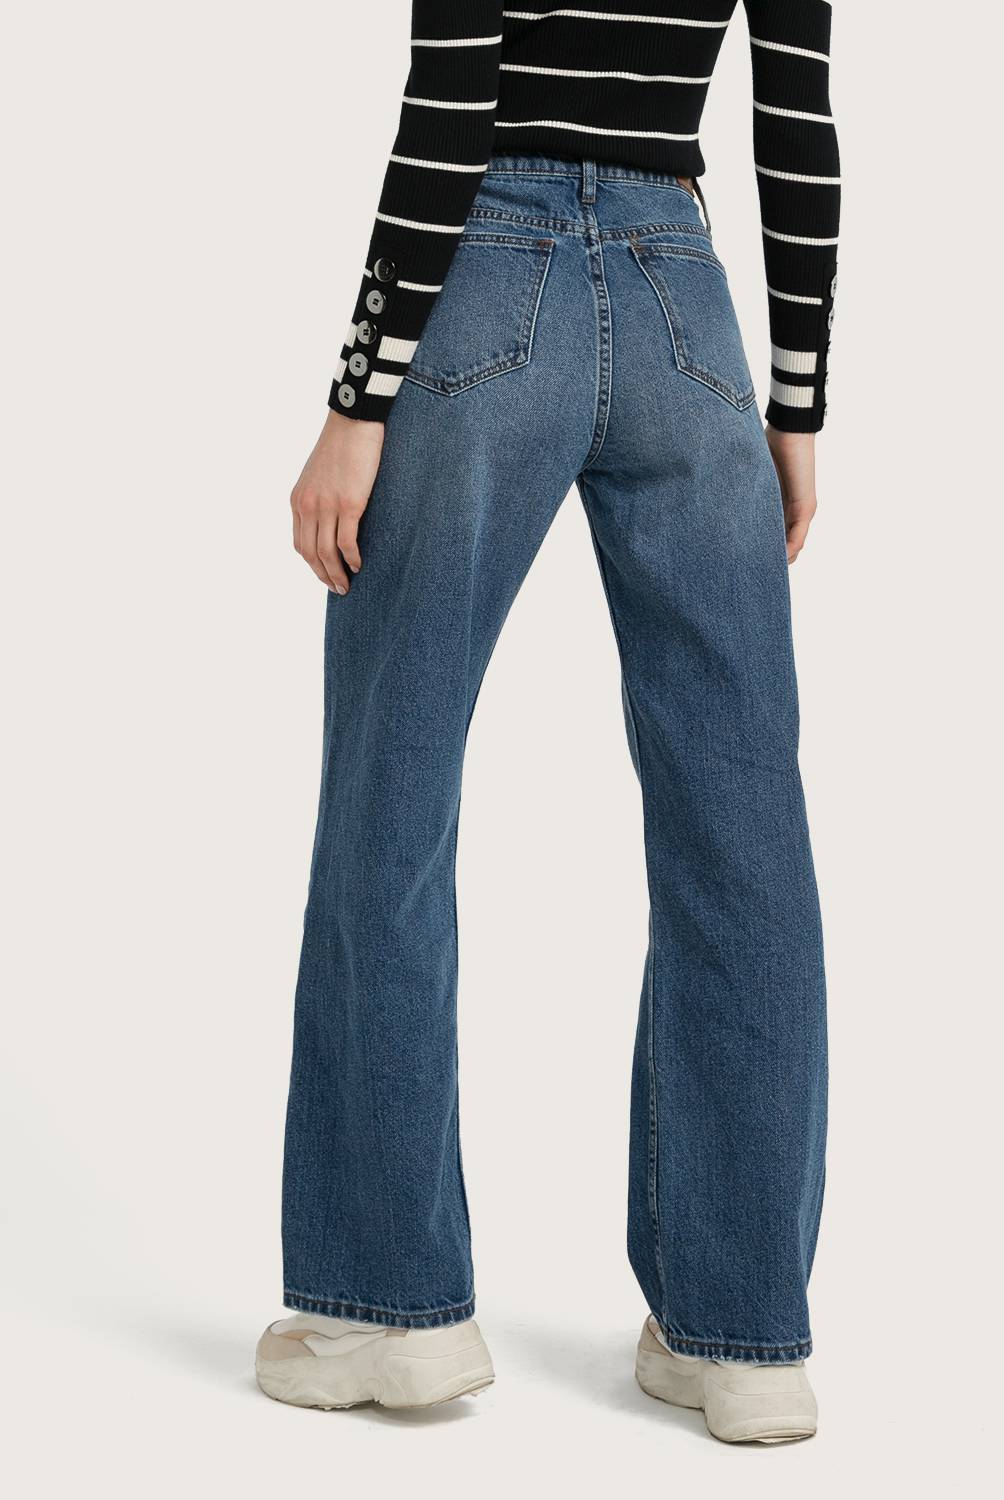 BASEMENT - Jeans Flare Tiro Alto Mujer